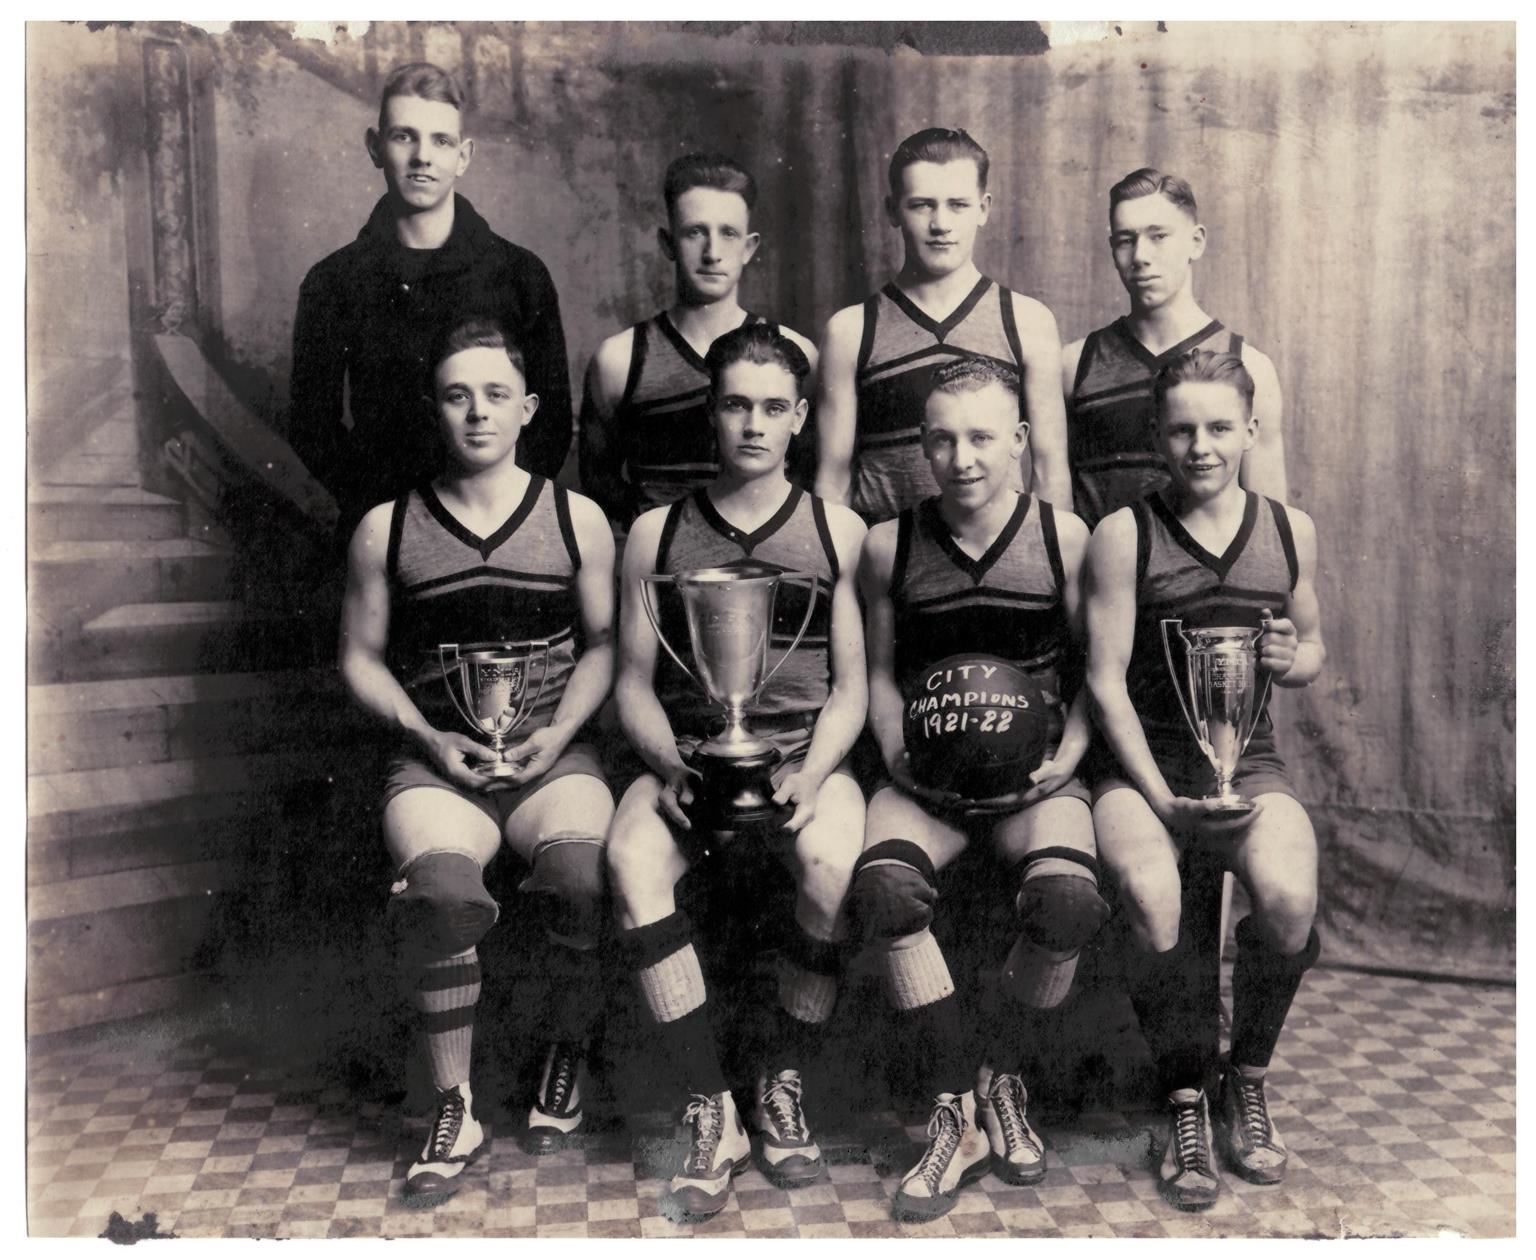 Boys Basketball 1921-22 City Champions photo